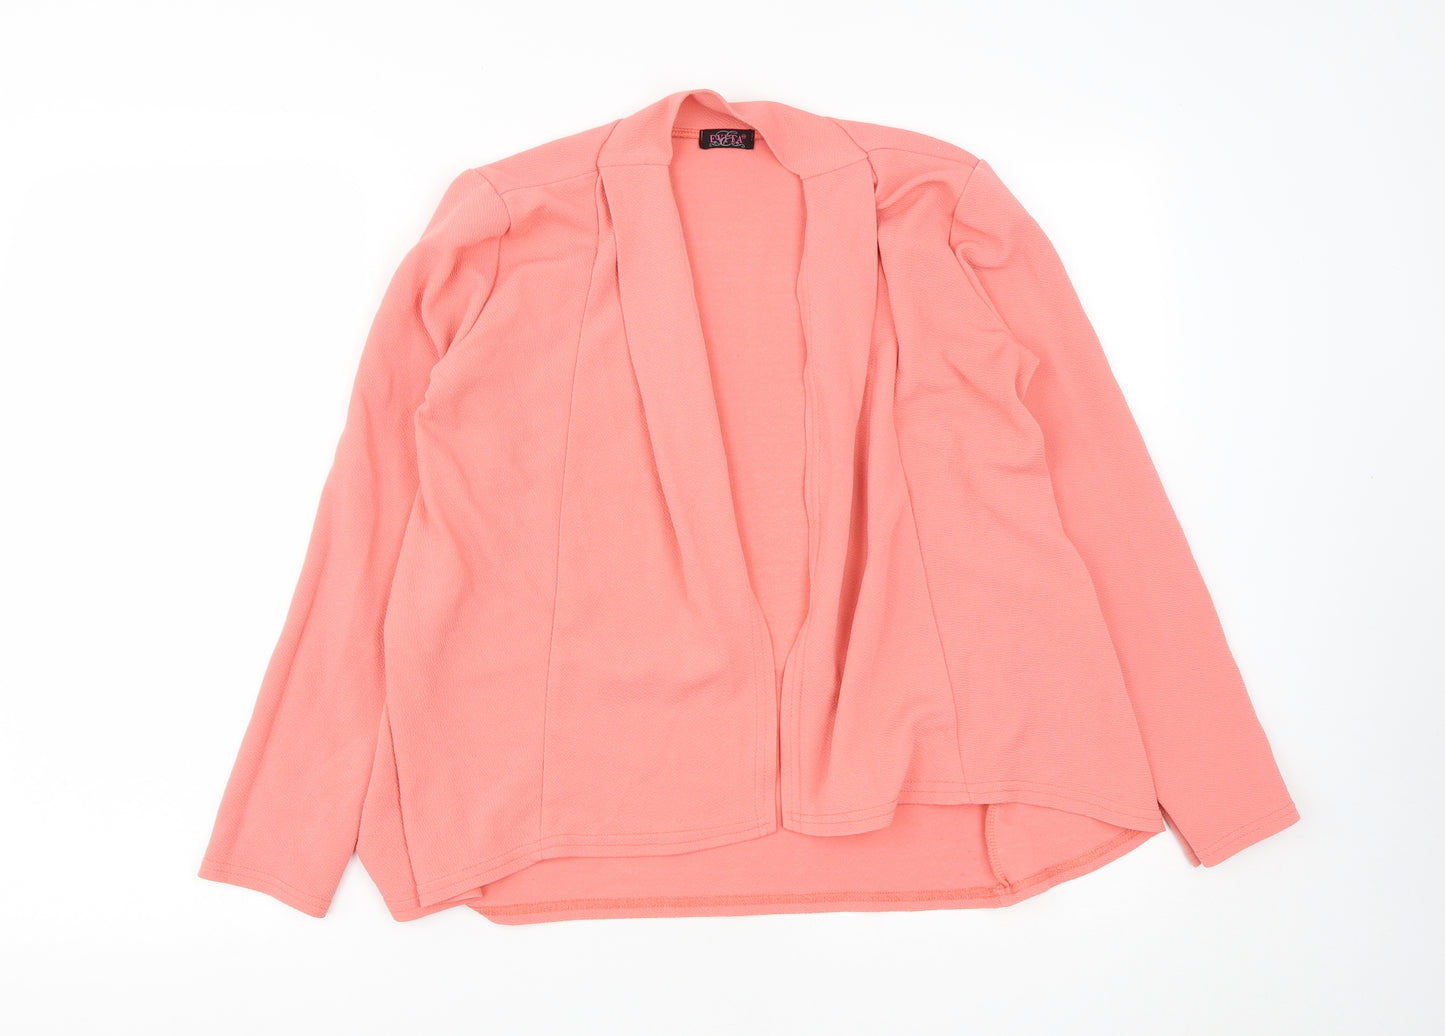 Evita Womens Pink   Jacket  Size 10